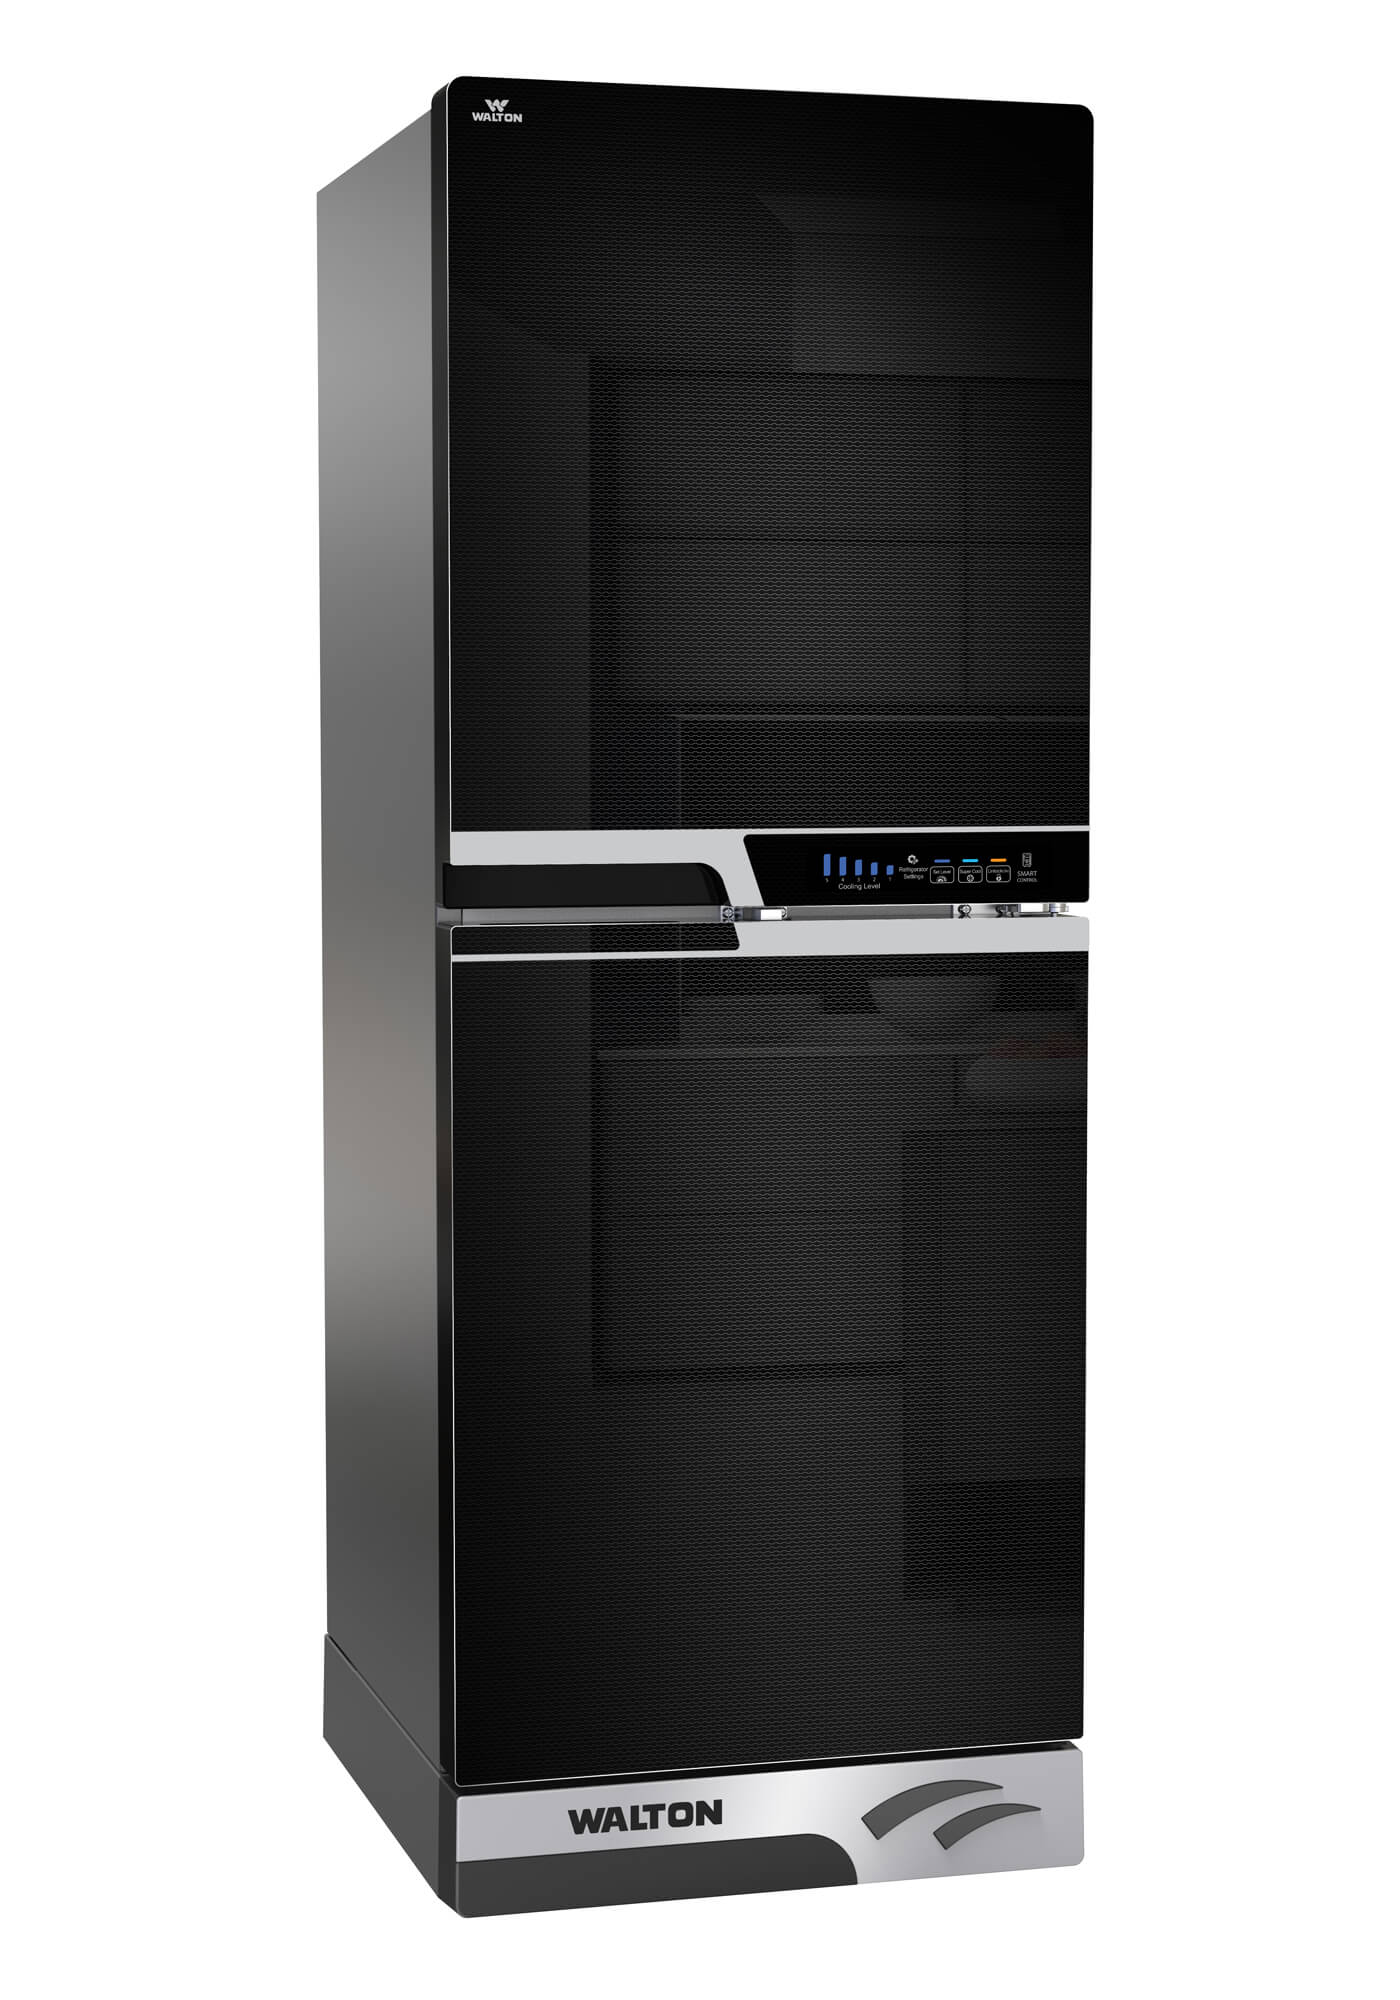 Walton Direct Cool Refrigerator Wfe 3a2 Gden Dd P Inverter Damicombd